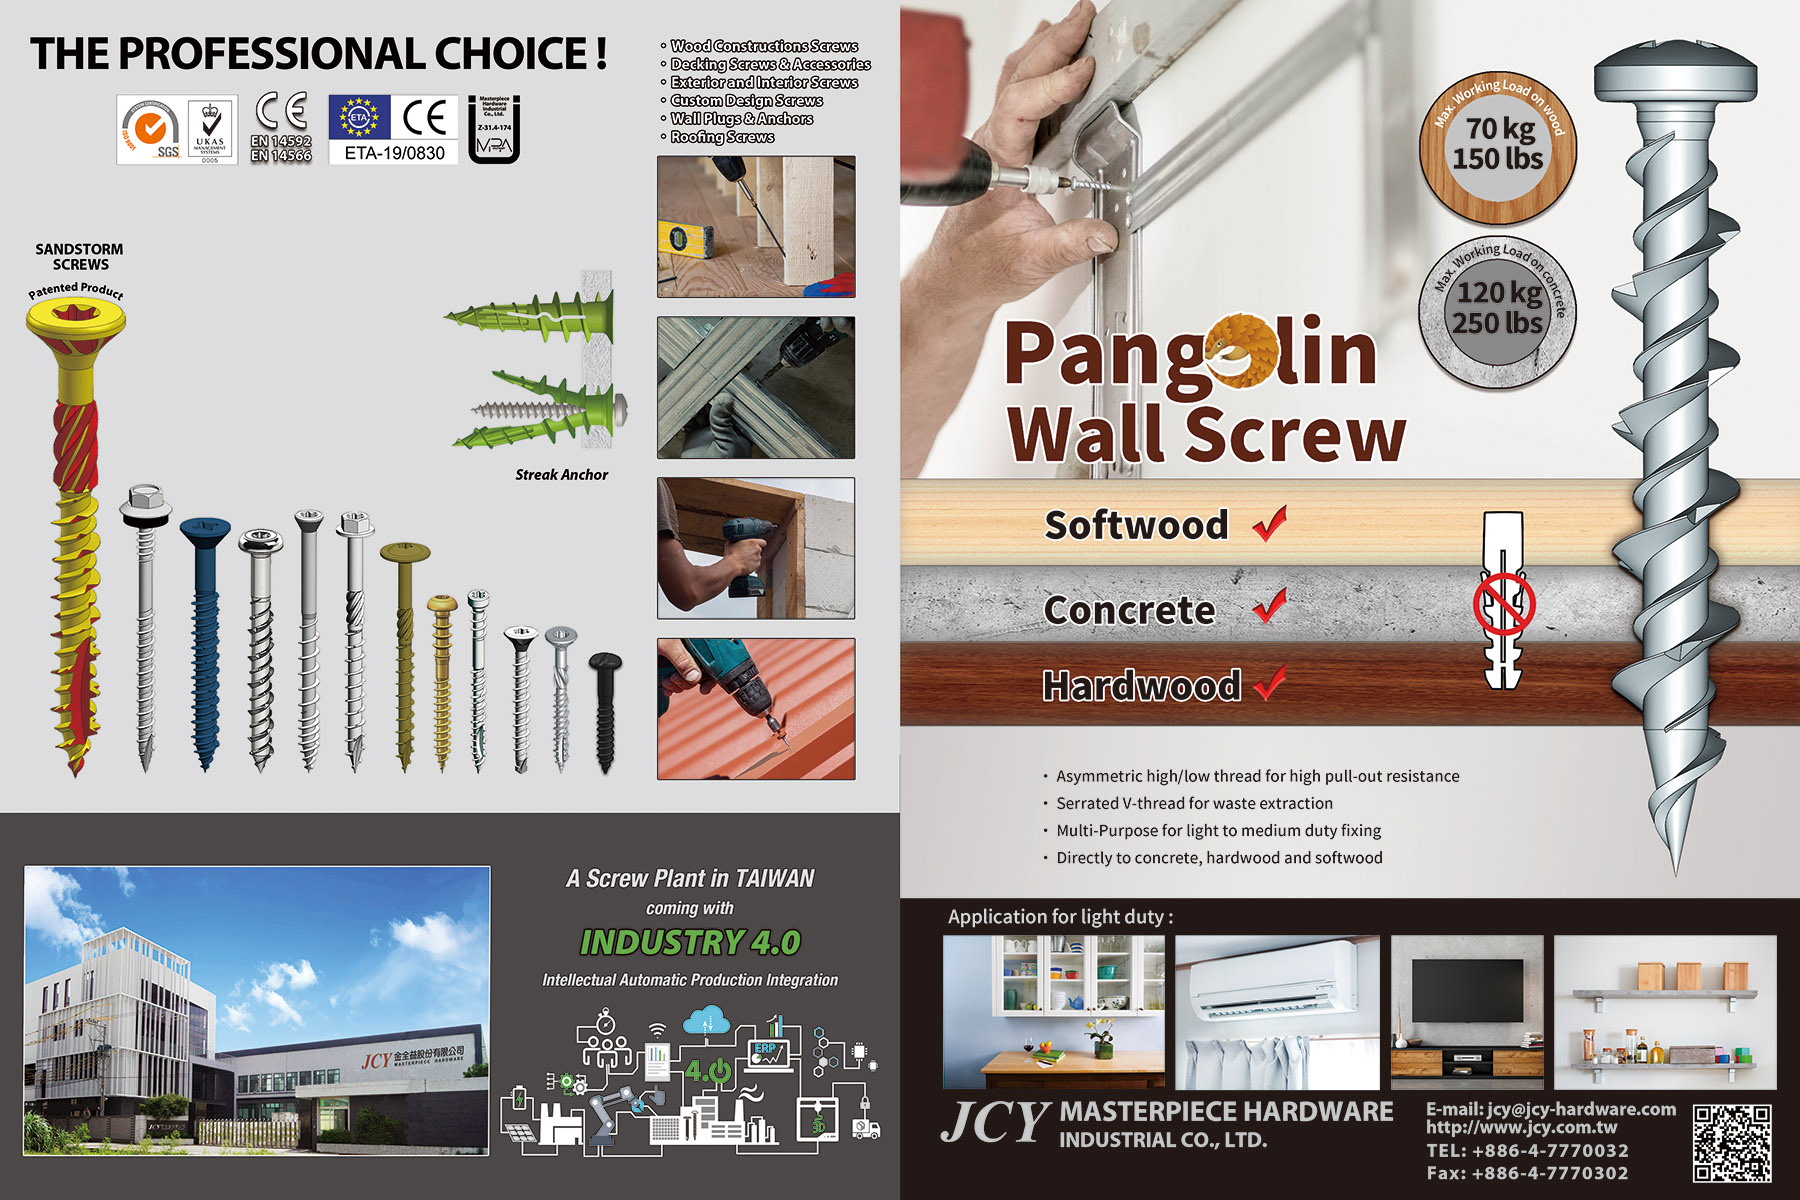 MASTERPIECE HARDWARE INDUSTRIAL CO., LTD. , Sandstorm Screws, Streak Anchor, Pangolin Wall Screws, Wood Constructions Screws, Decking Screws & Accessories, Exterior and Interior Screws, Custom Design Screws, Wall Plugs & Anchors, Roofing Screws